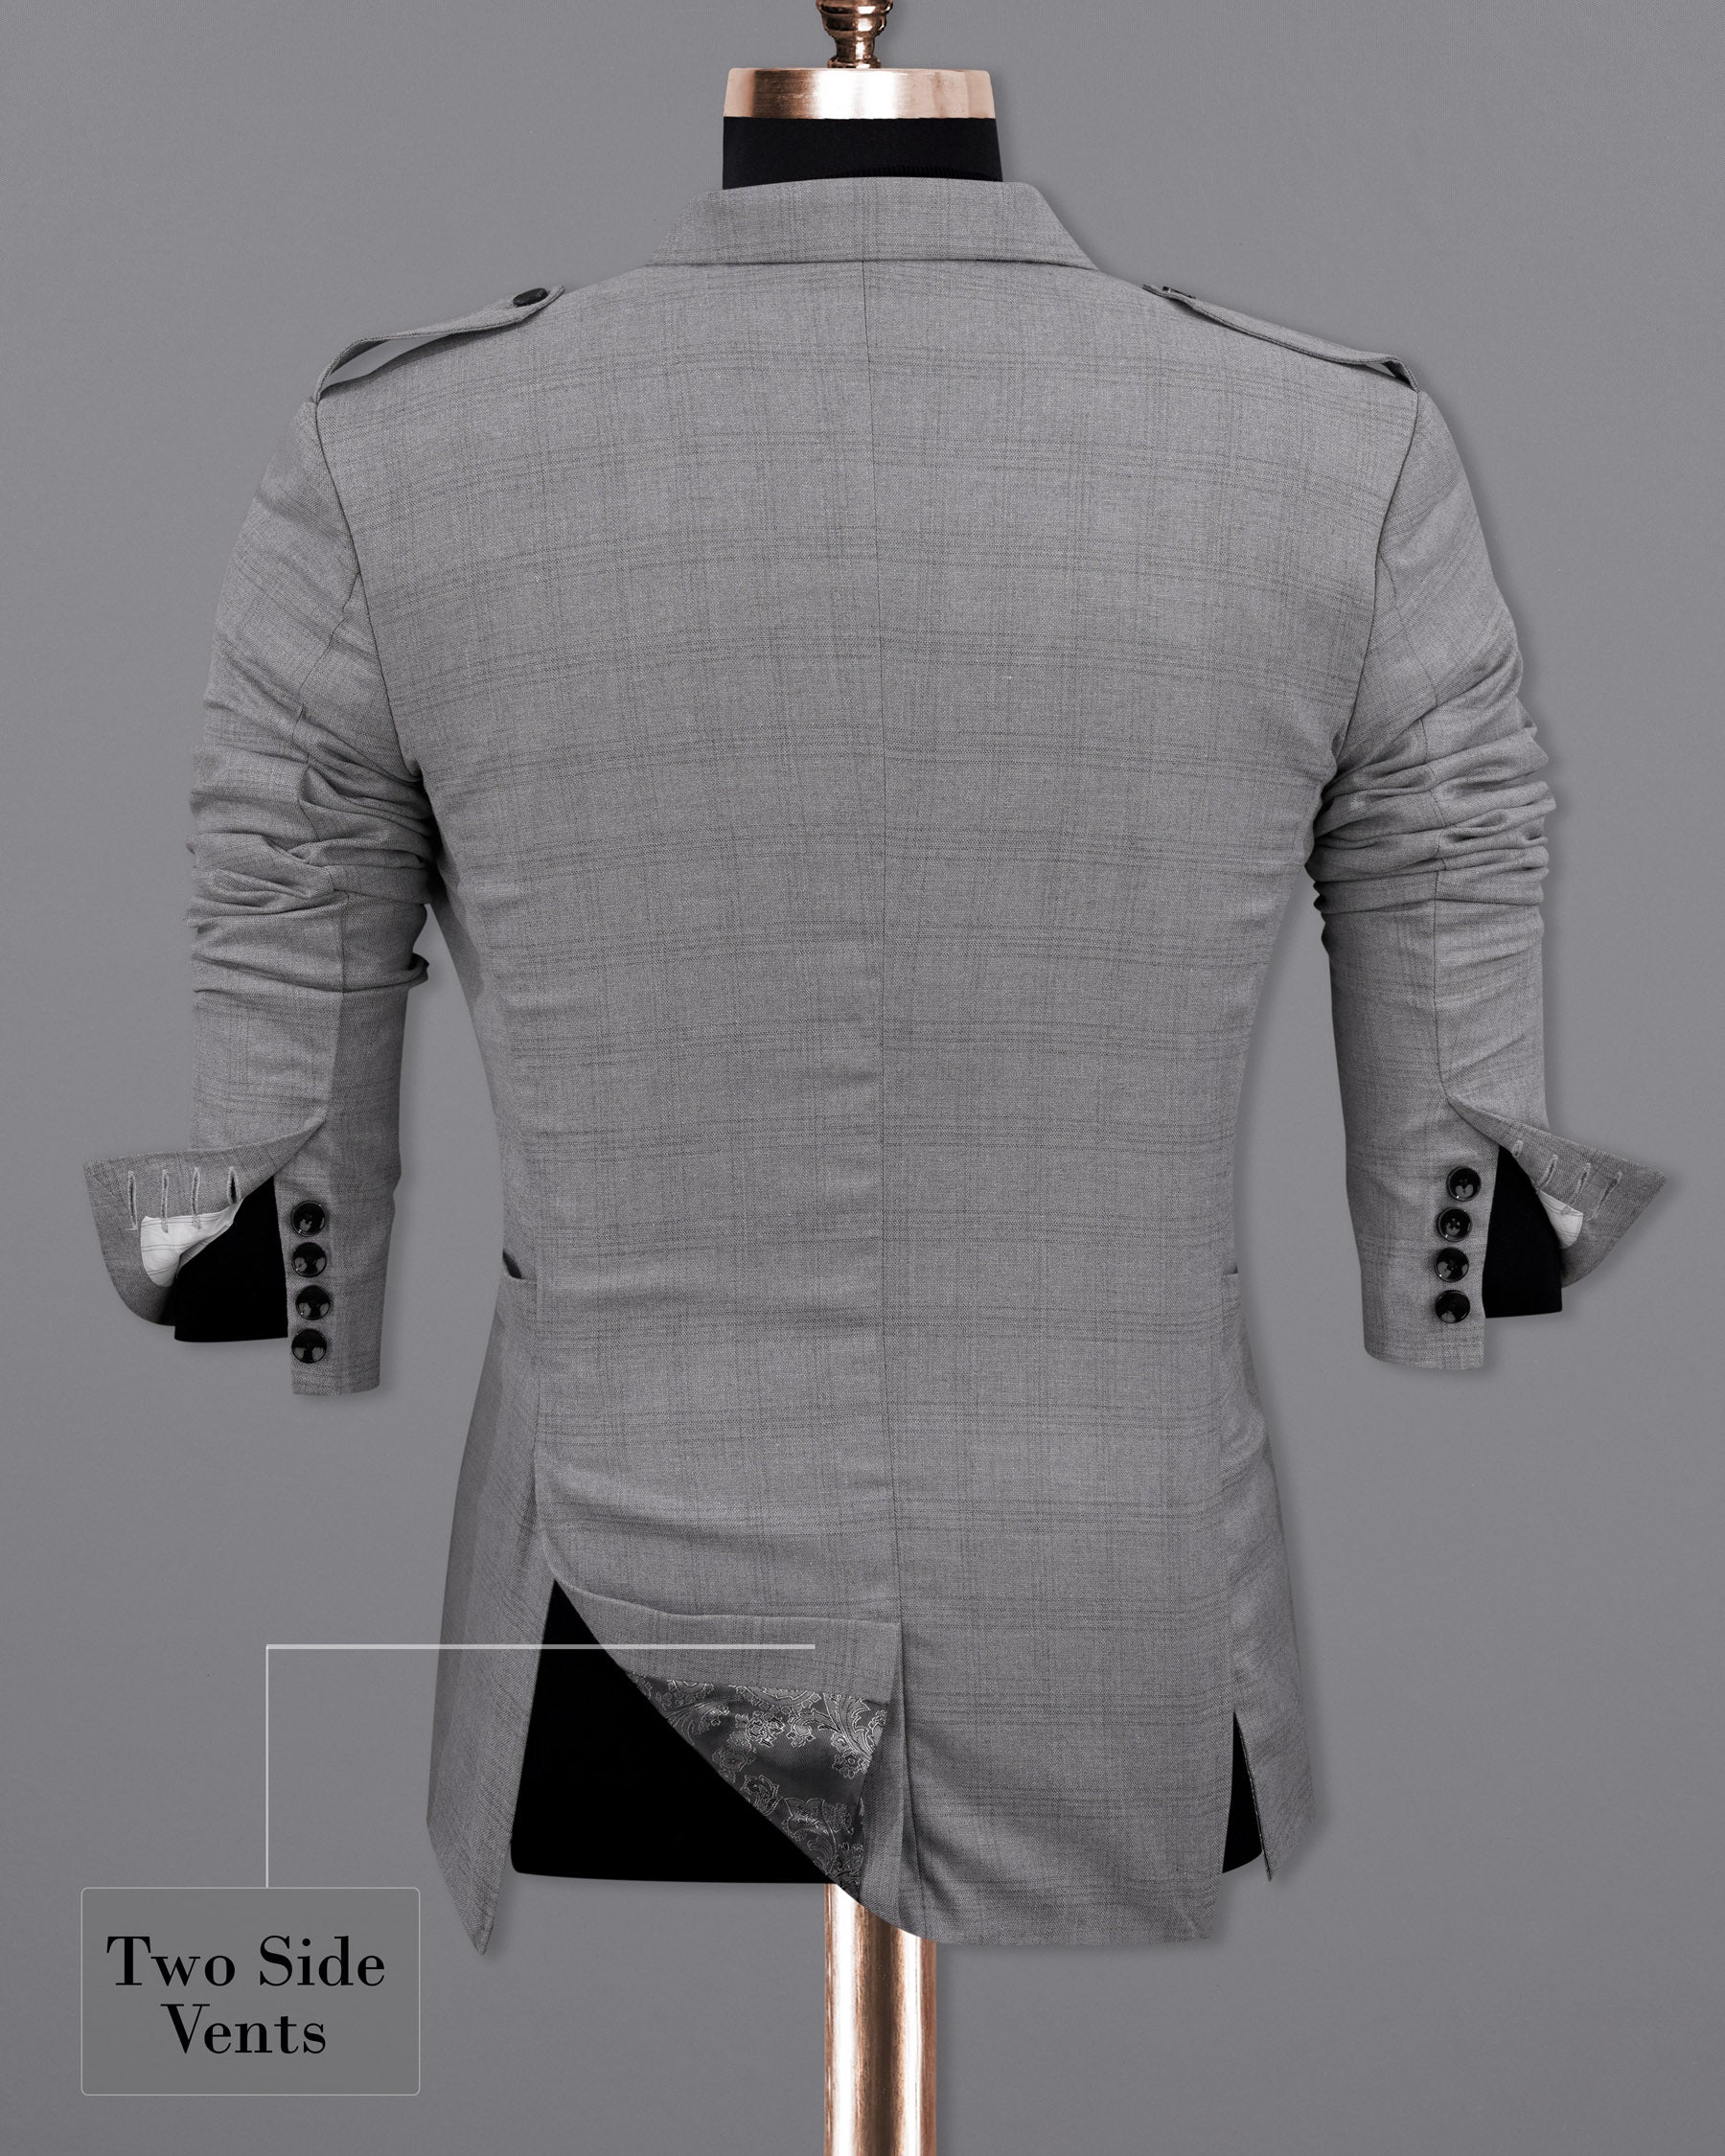 Stack Steel Color Double Breasted Subtle Plaid Designer Suit with Belt Closure